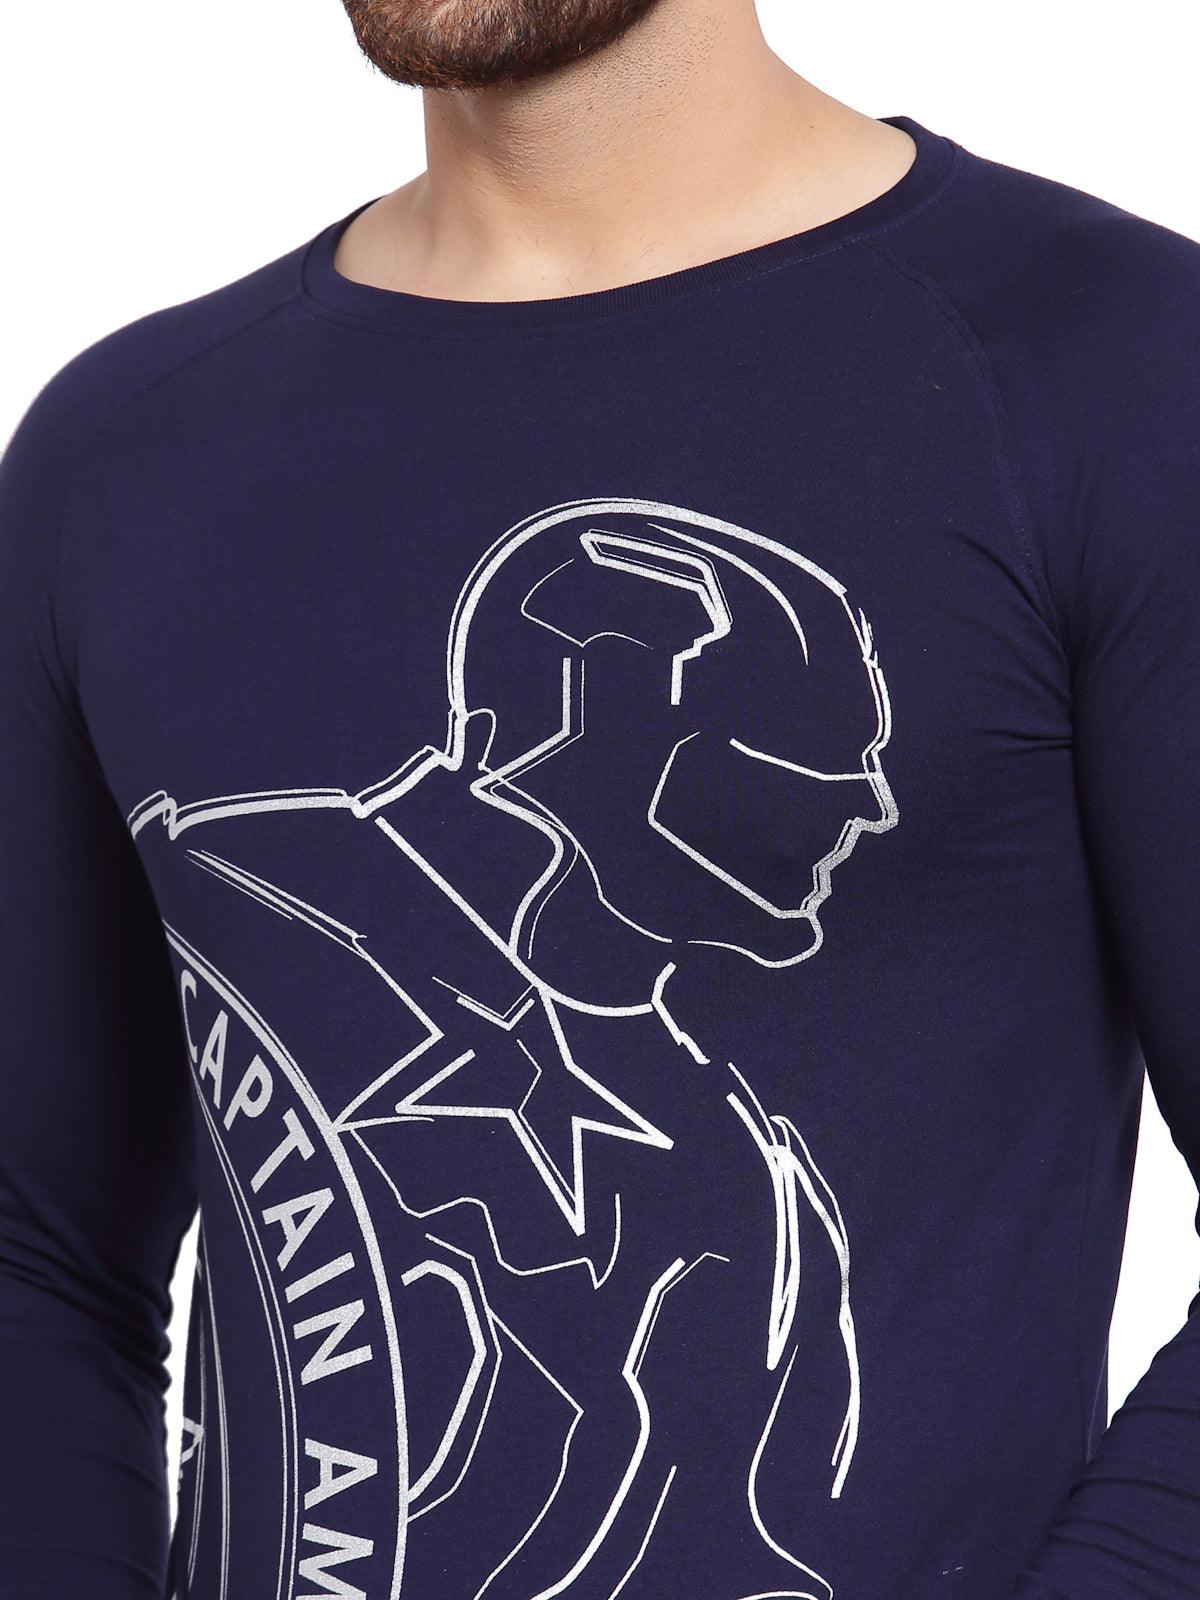 Sporto Men's Captain America Print T-shirt - Navy